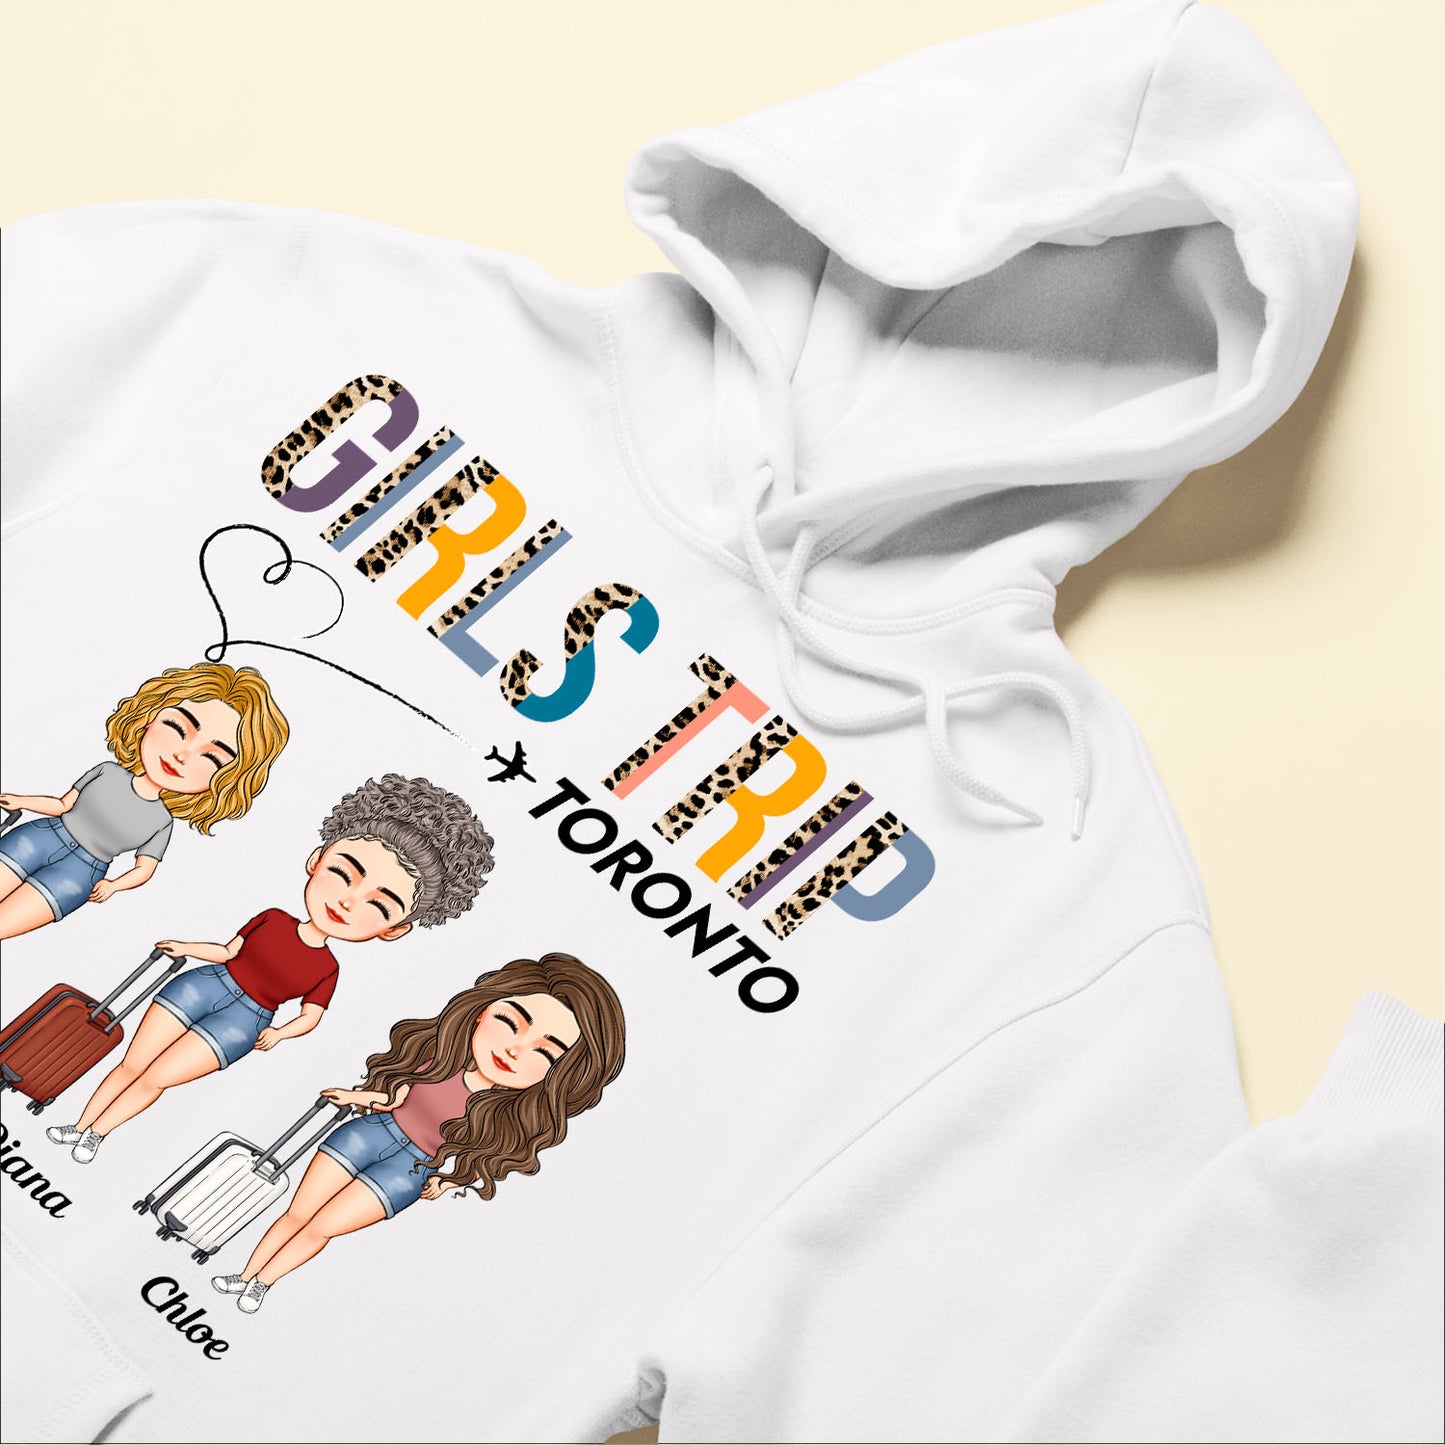 It's Girls Trip - Personalized Shirt